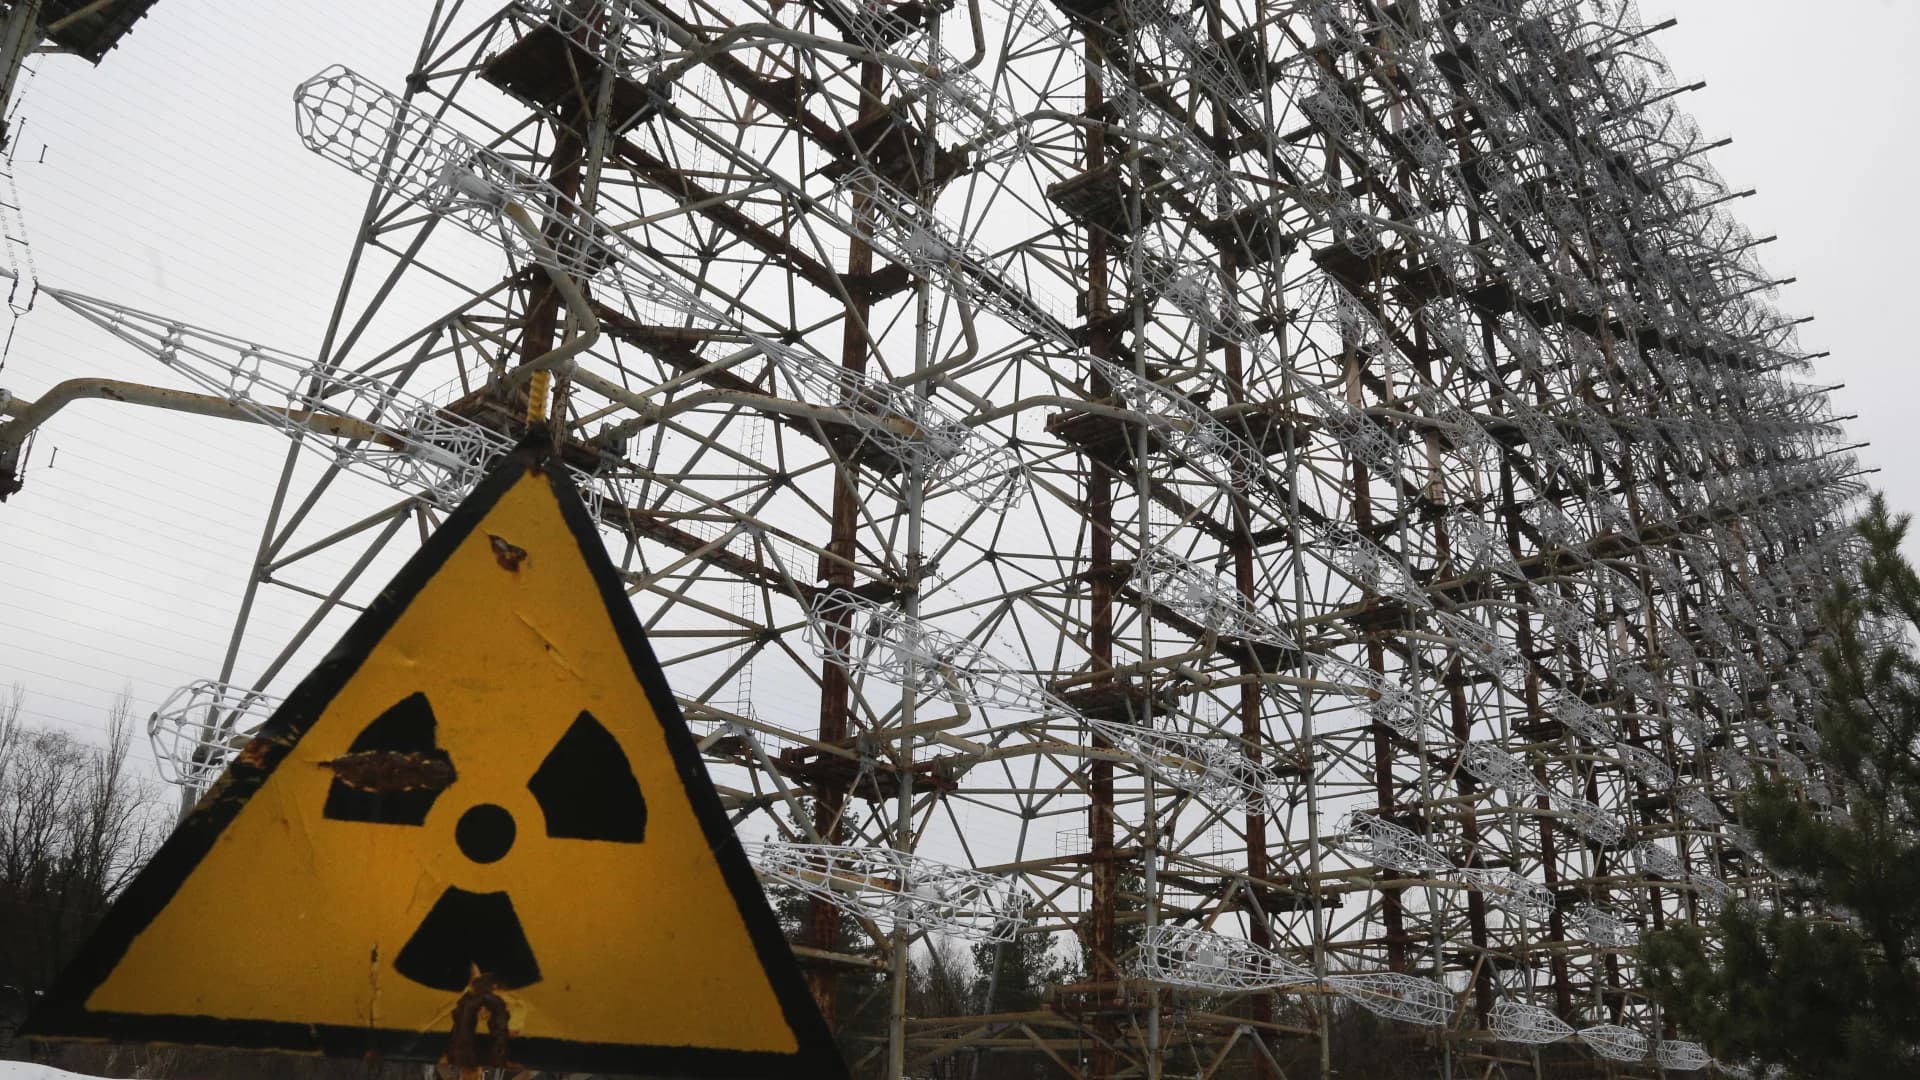 Ukraine: Russians leaving Chernobyl after radiation exposure